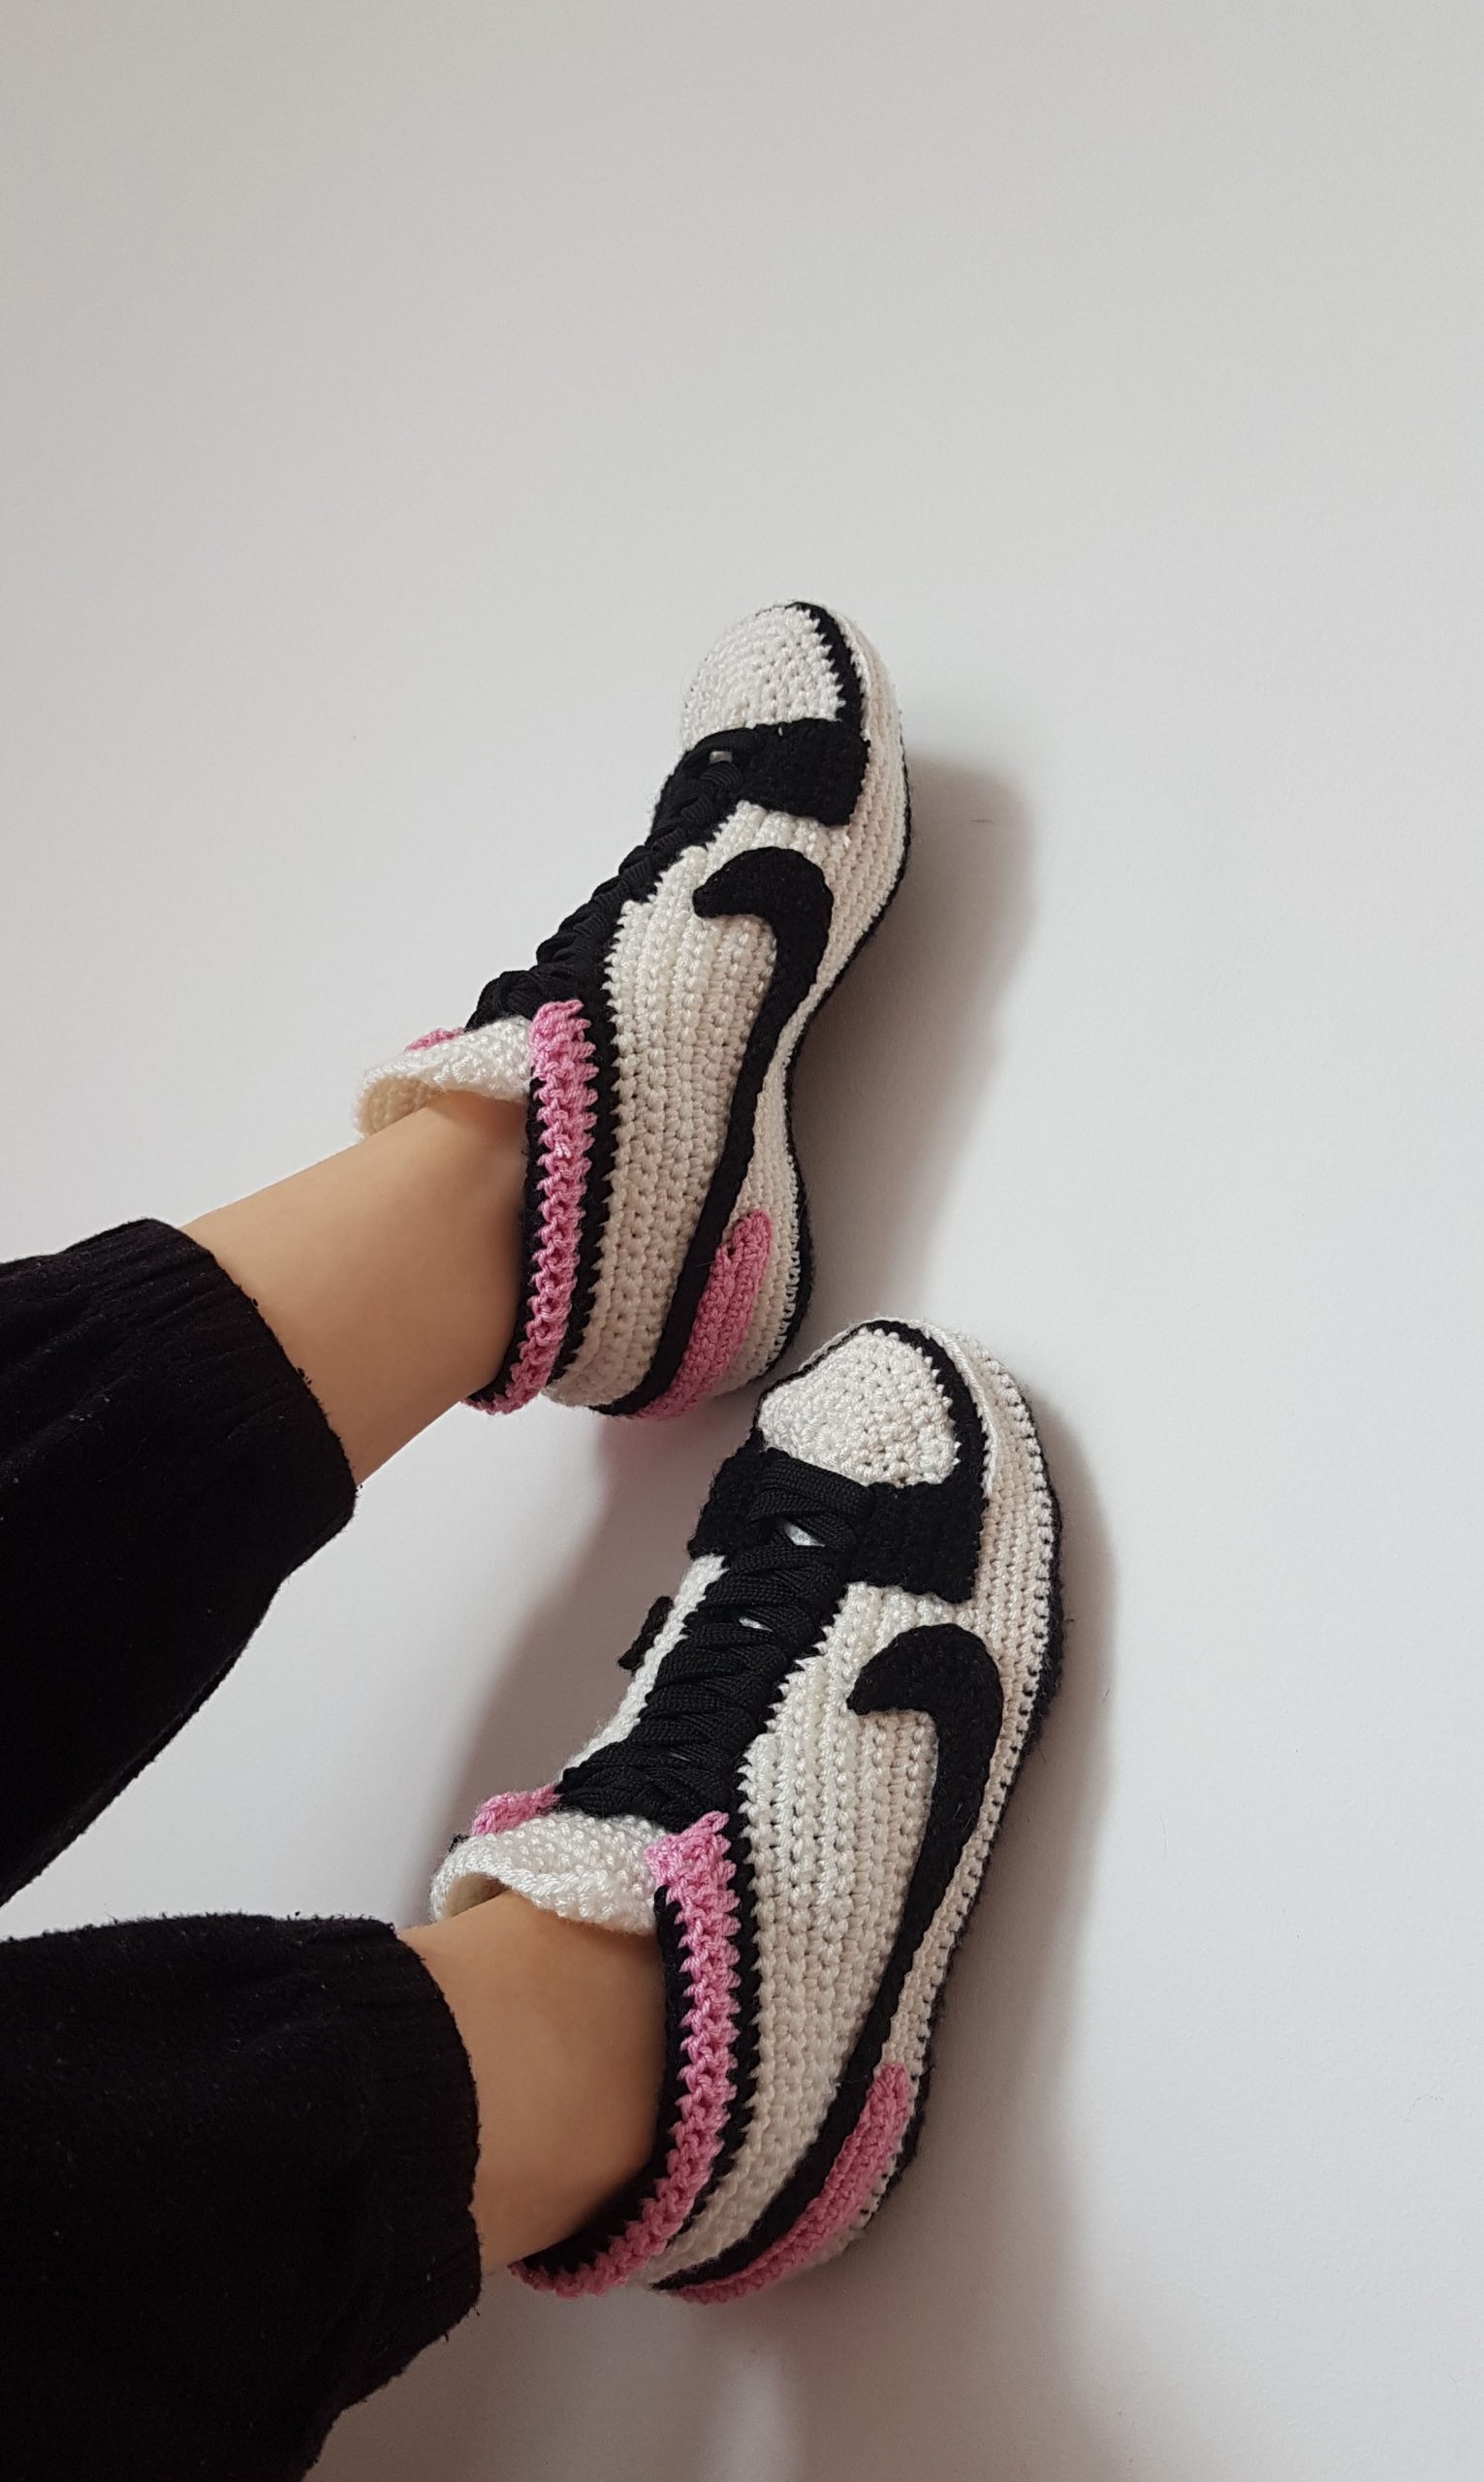 Chaussons crochet Nike - Fait main